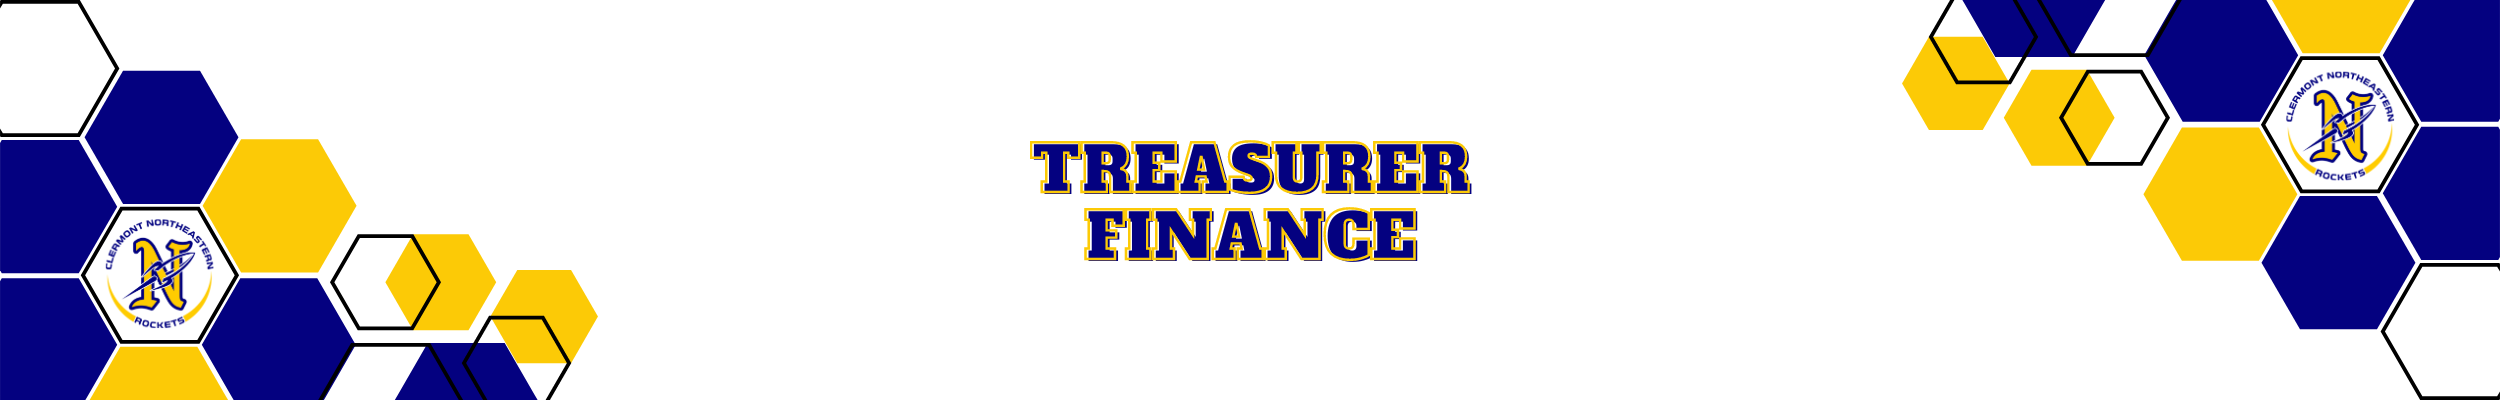 Treasurer and Finance